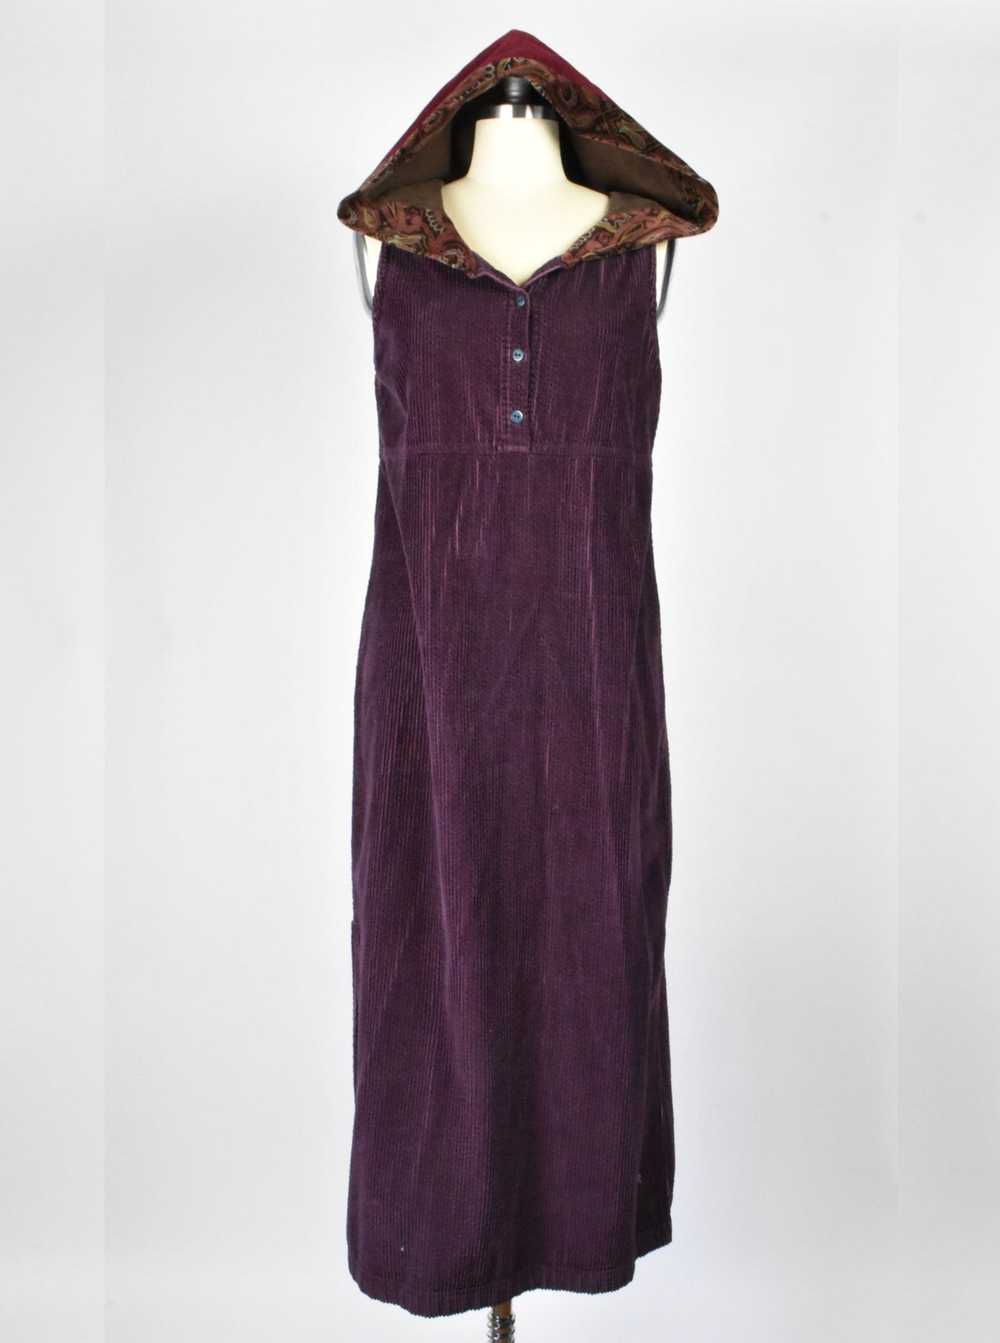 1990's Sleeveless Corduroy Dress with Hood - image 1